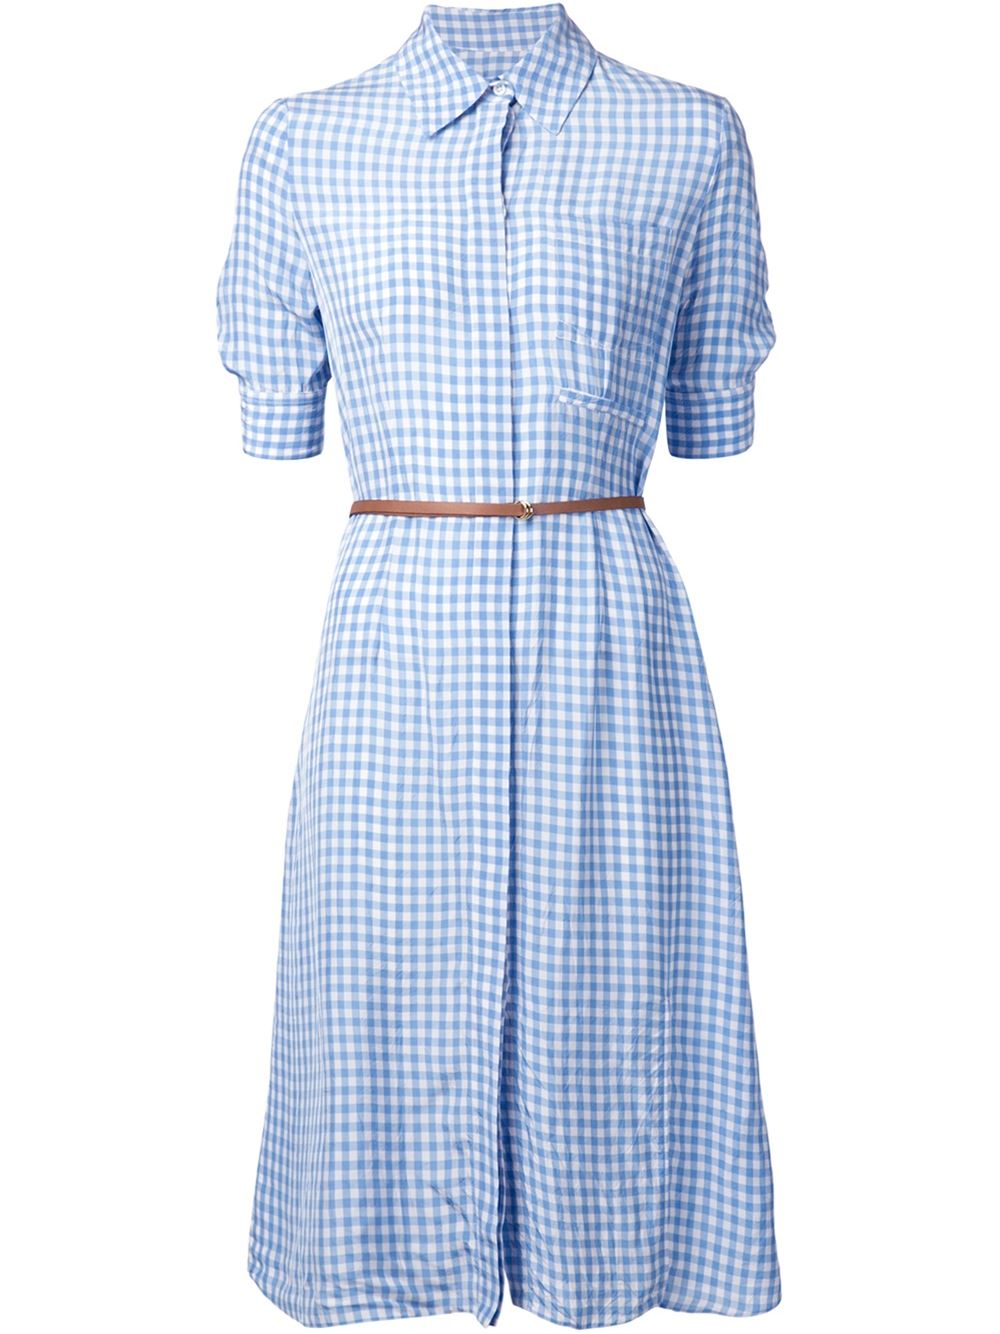 Altuzarra Gingham Belted Shirt Dress in Blue | Lyst